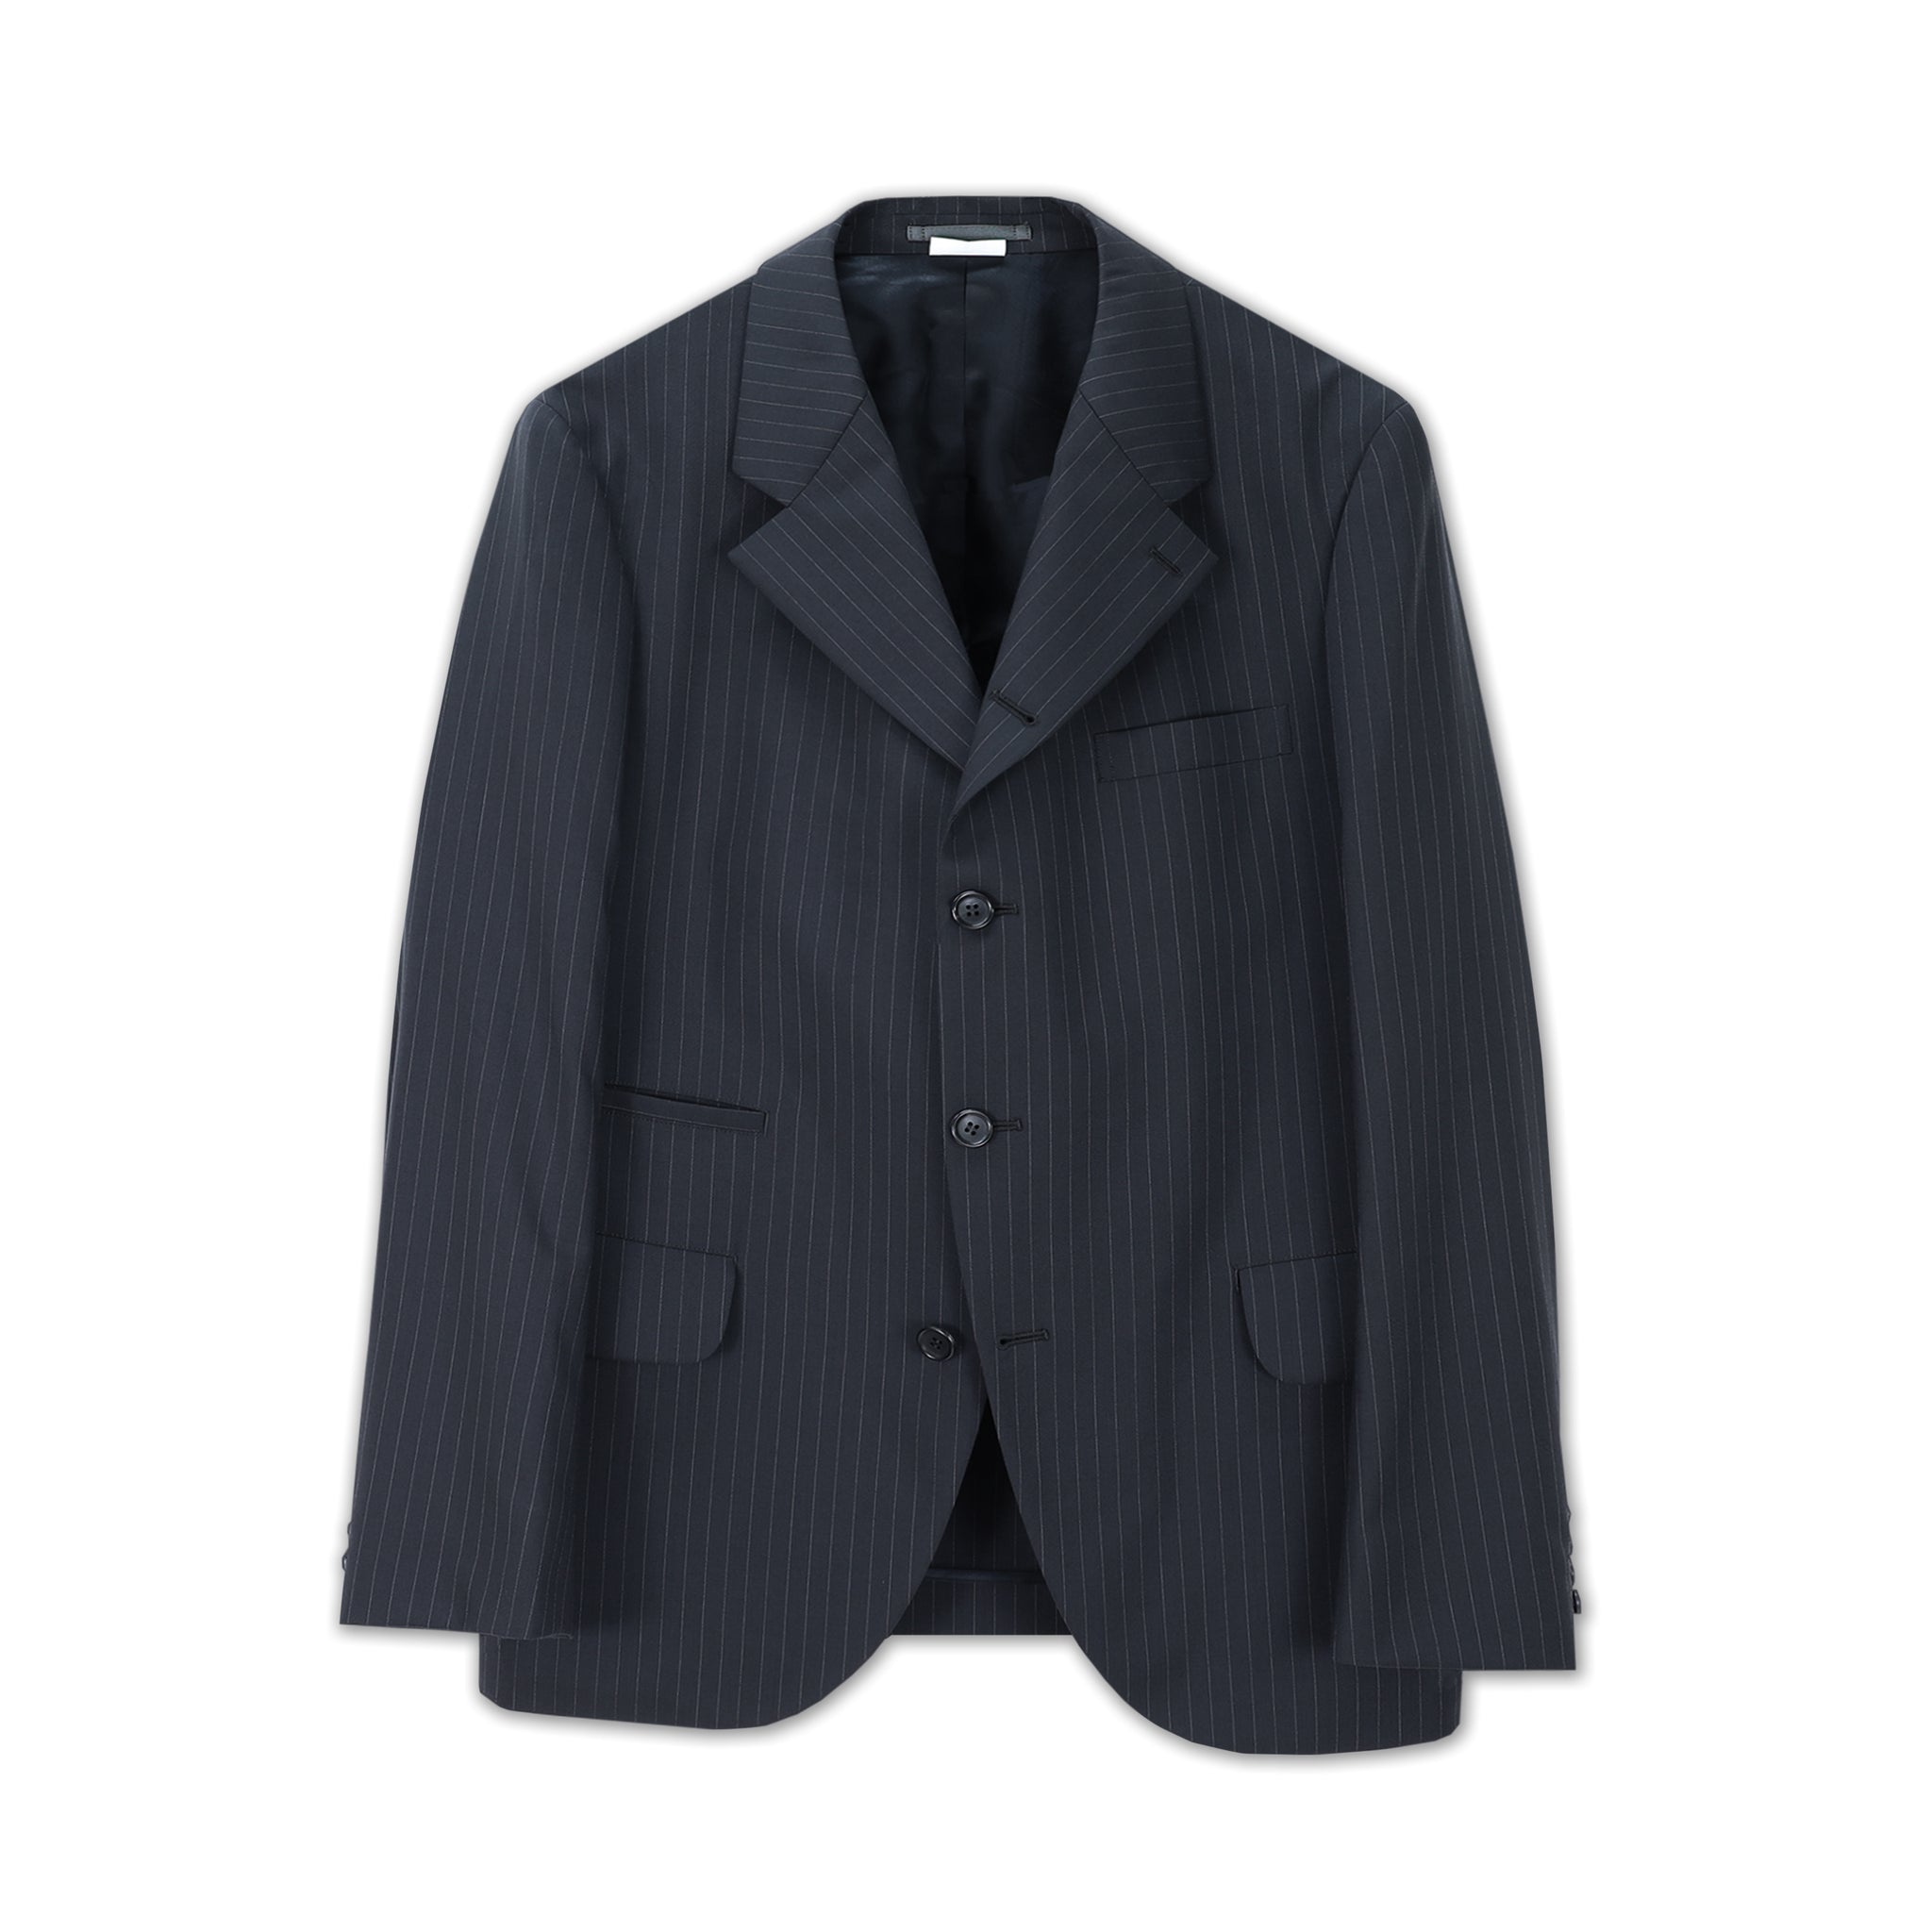 Charcoal Grey Wool Pinstripe Jacket